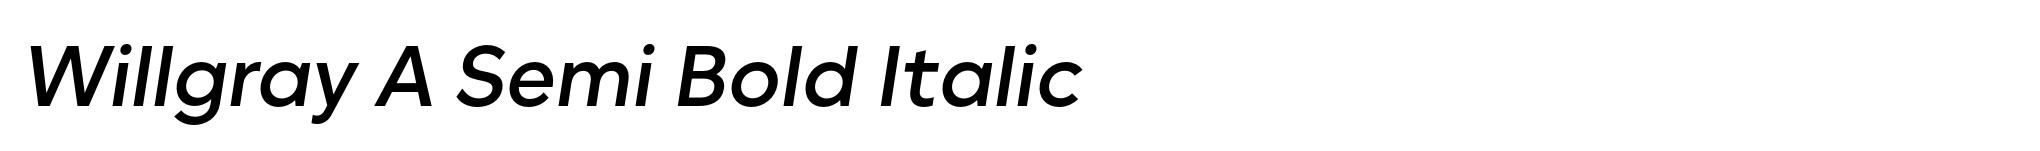 Willgray A Semi Bold Italic image